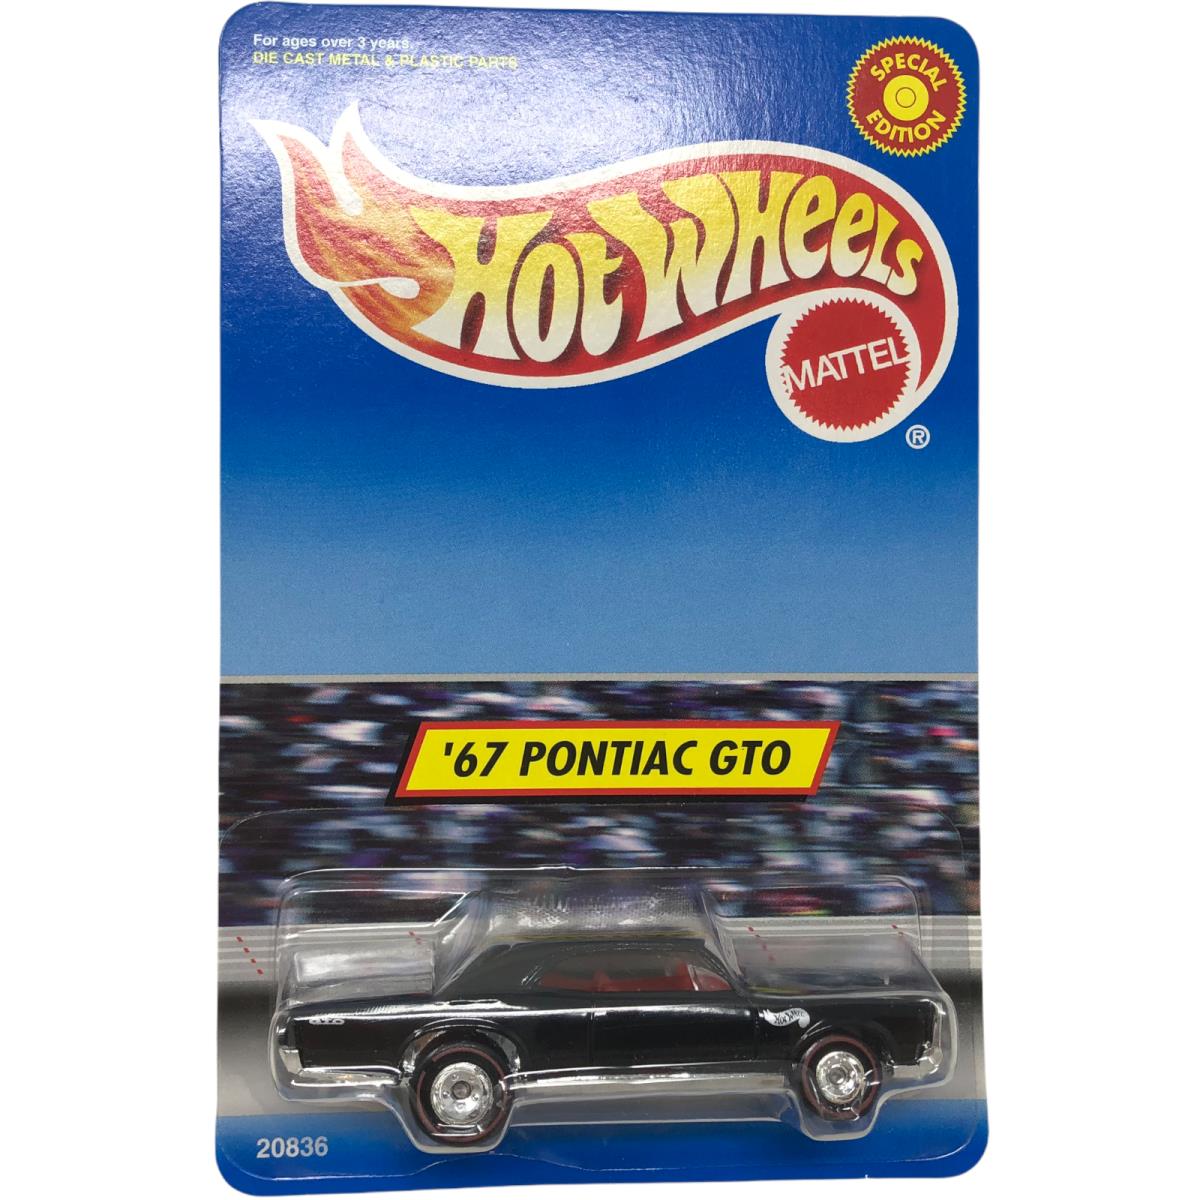 Vtg. Nip Hot Wheels `67 Pontiac Gto Special Edition Jiffy Lube 20836 Error Card - BLACK